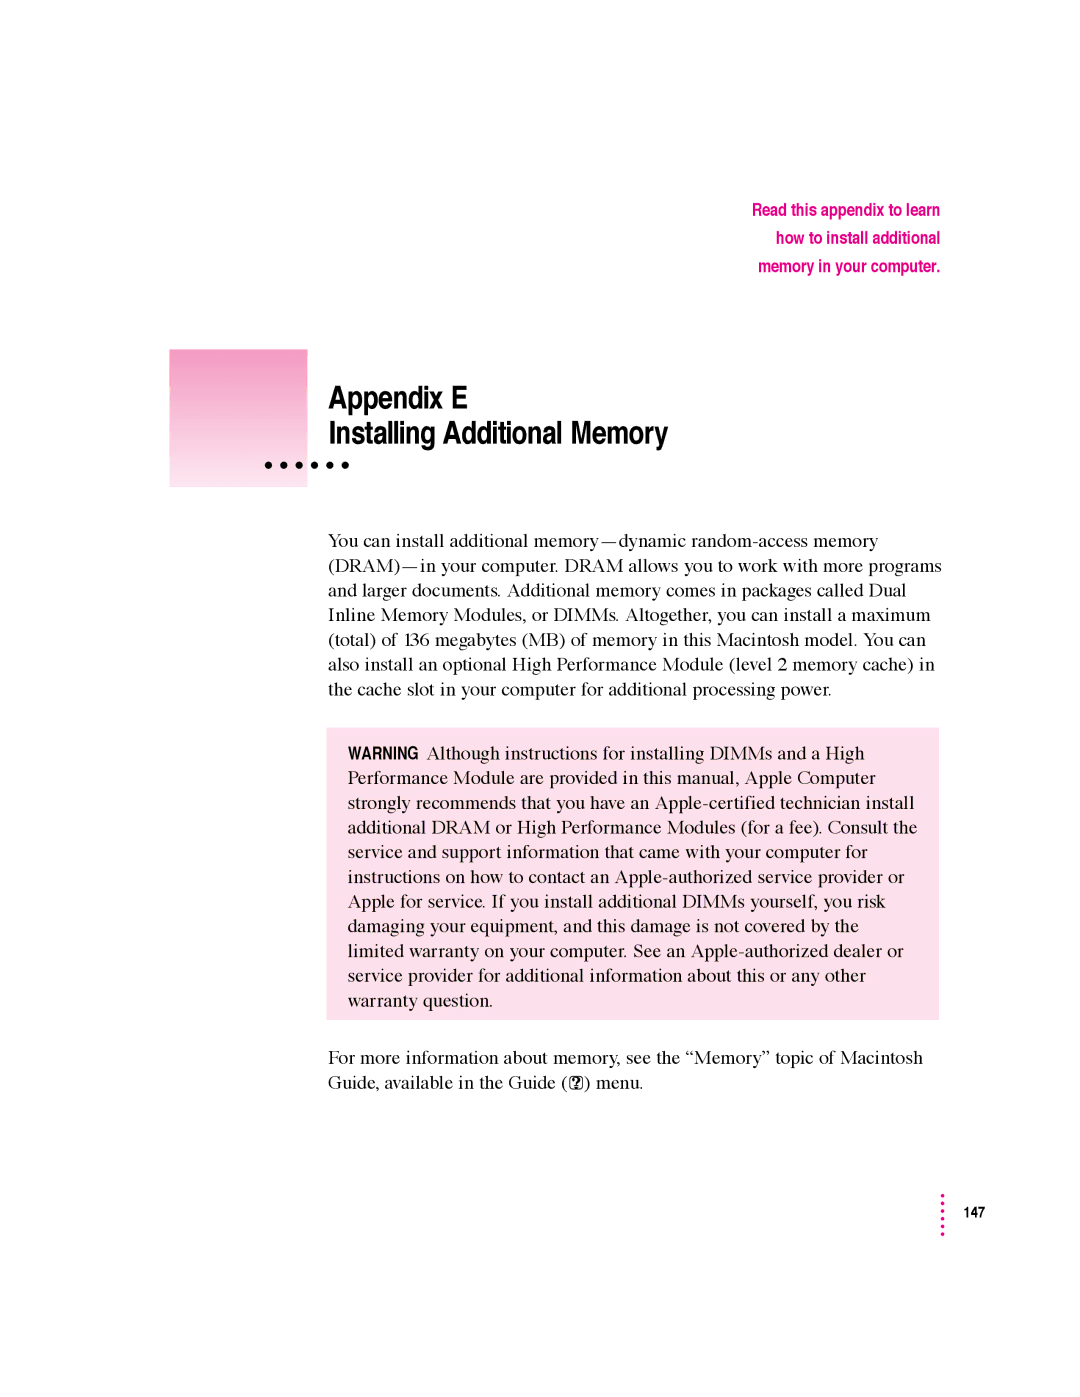 Apple 5400 Series manual Appendix E Installing Additional Memory 